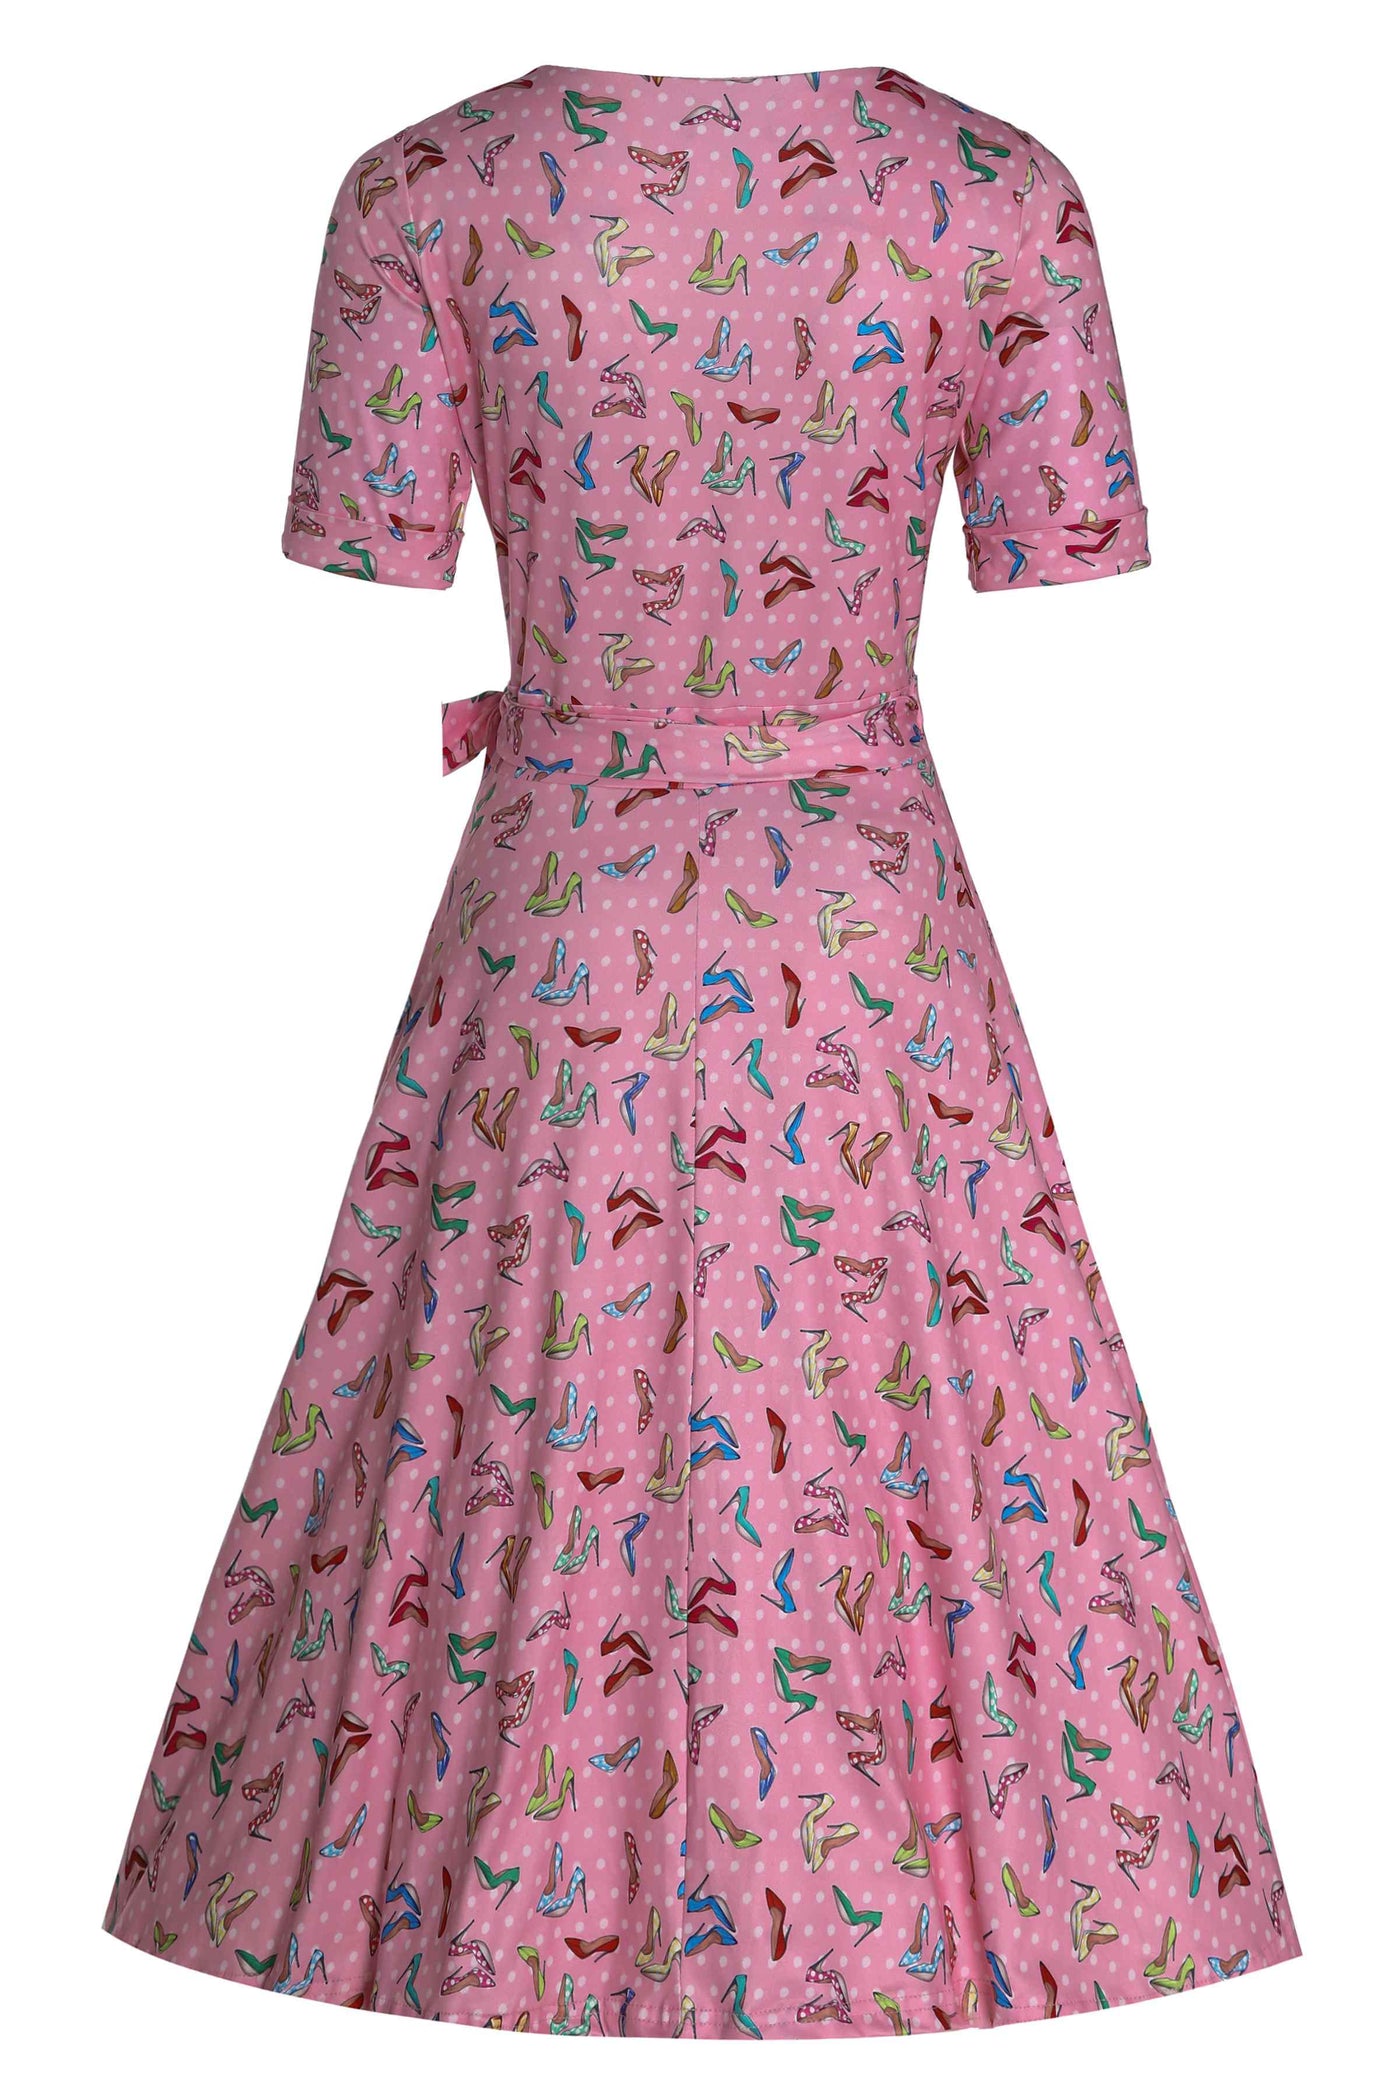 Back View of Cute Pink Stiletto Print Wrap Swing Dress